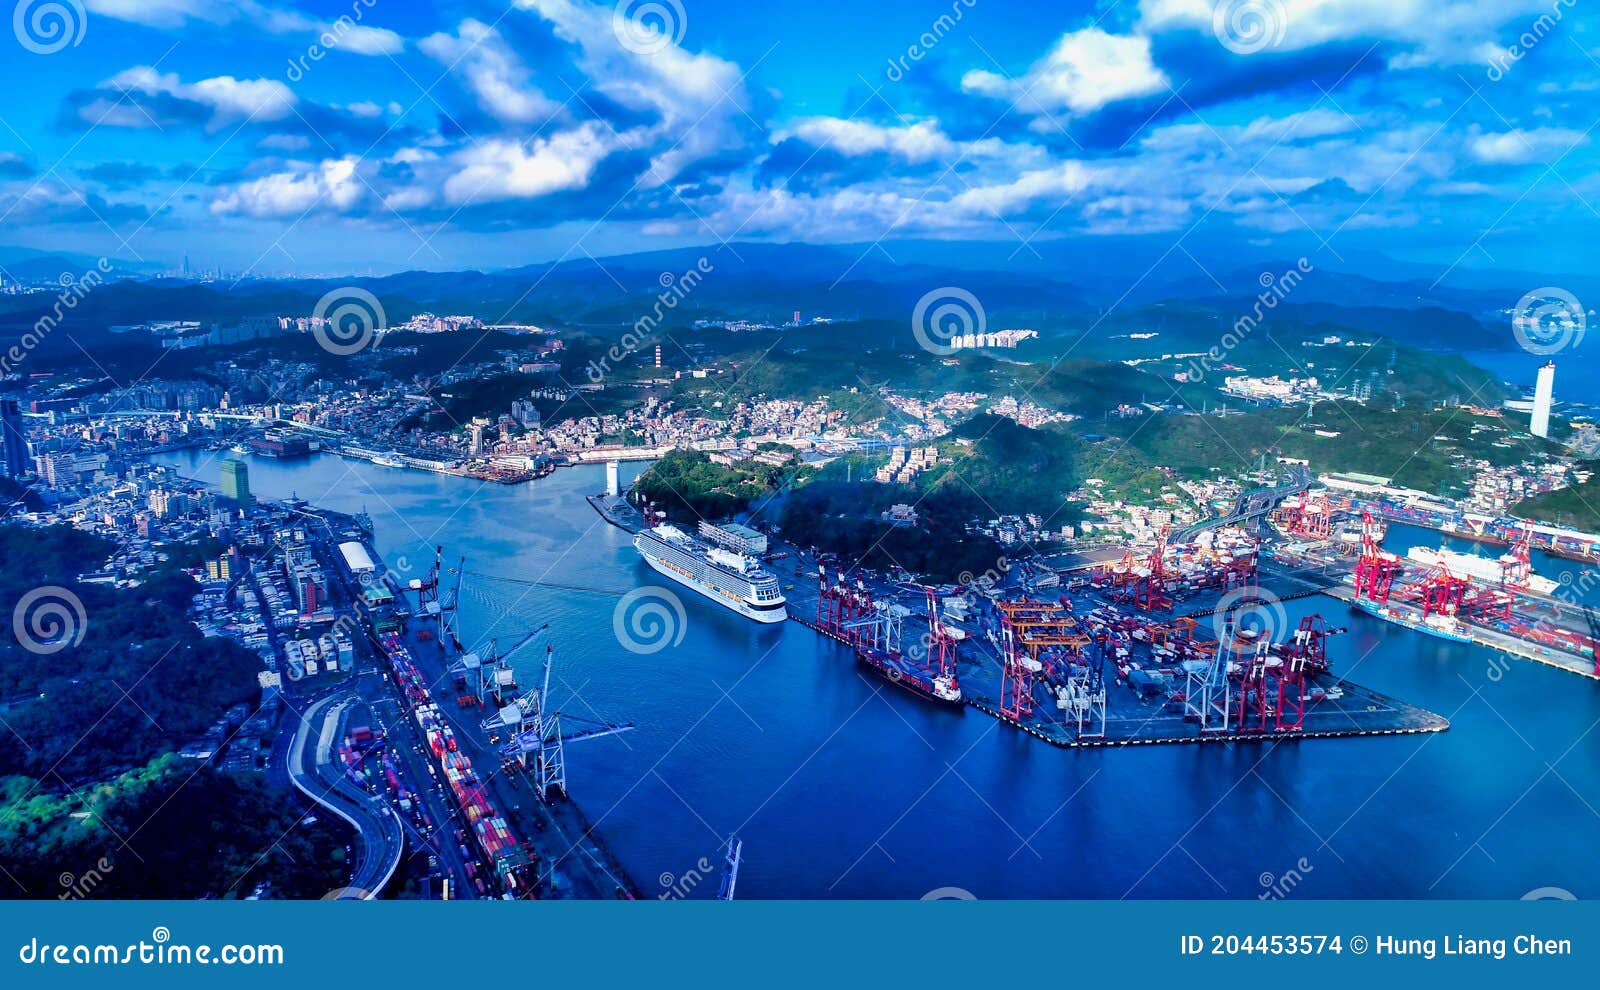 keelung taiwan cruise port